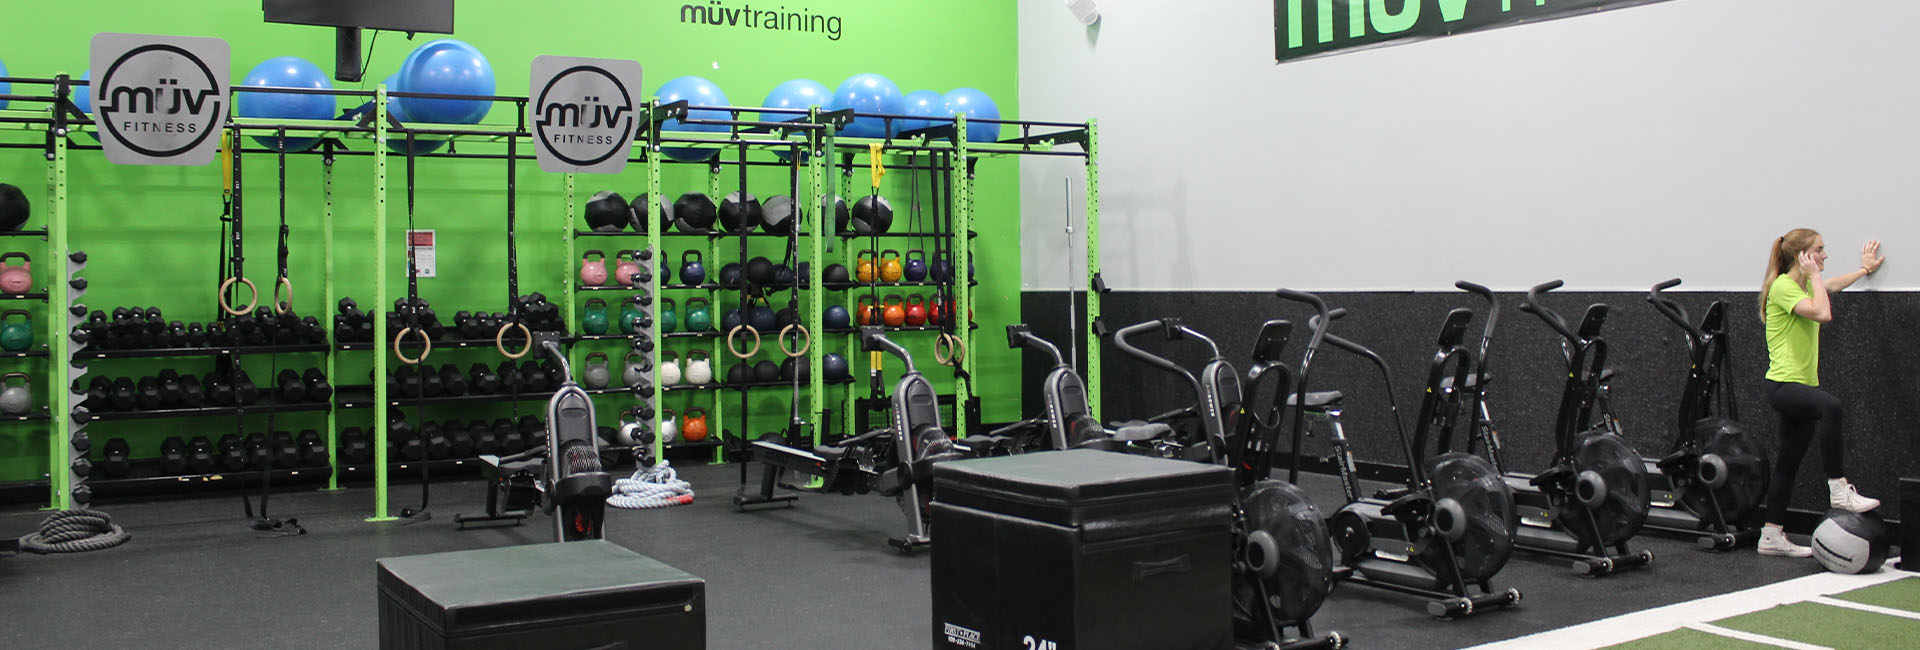 functional training equipment in modern gym